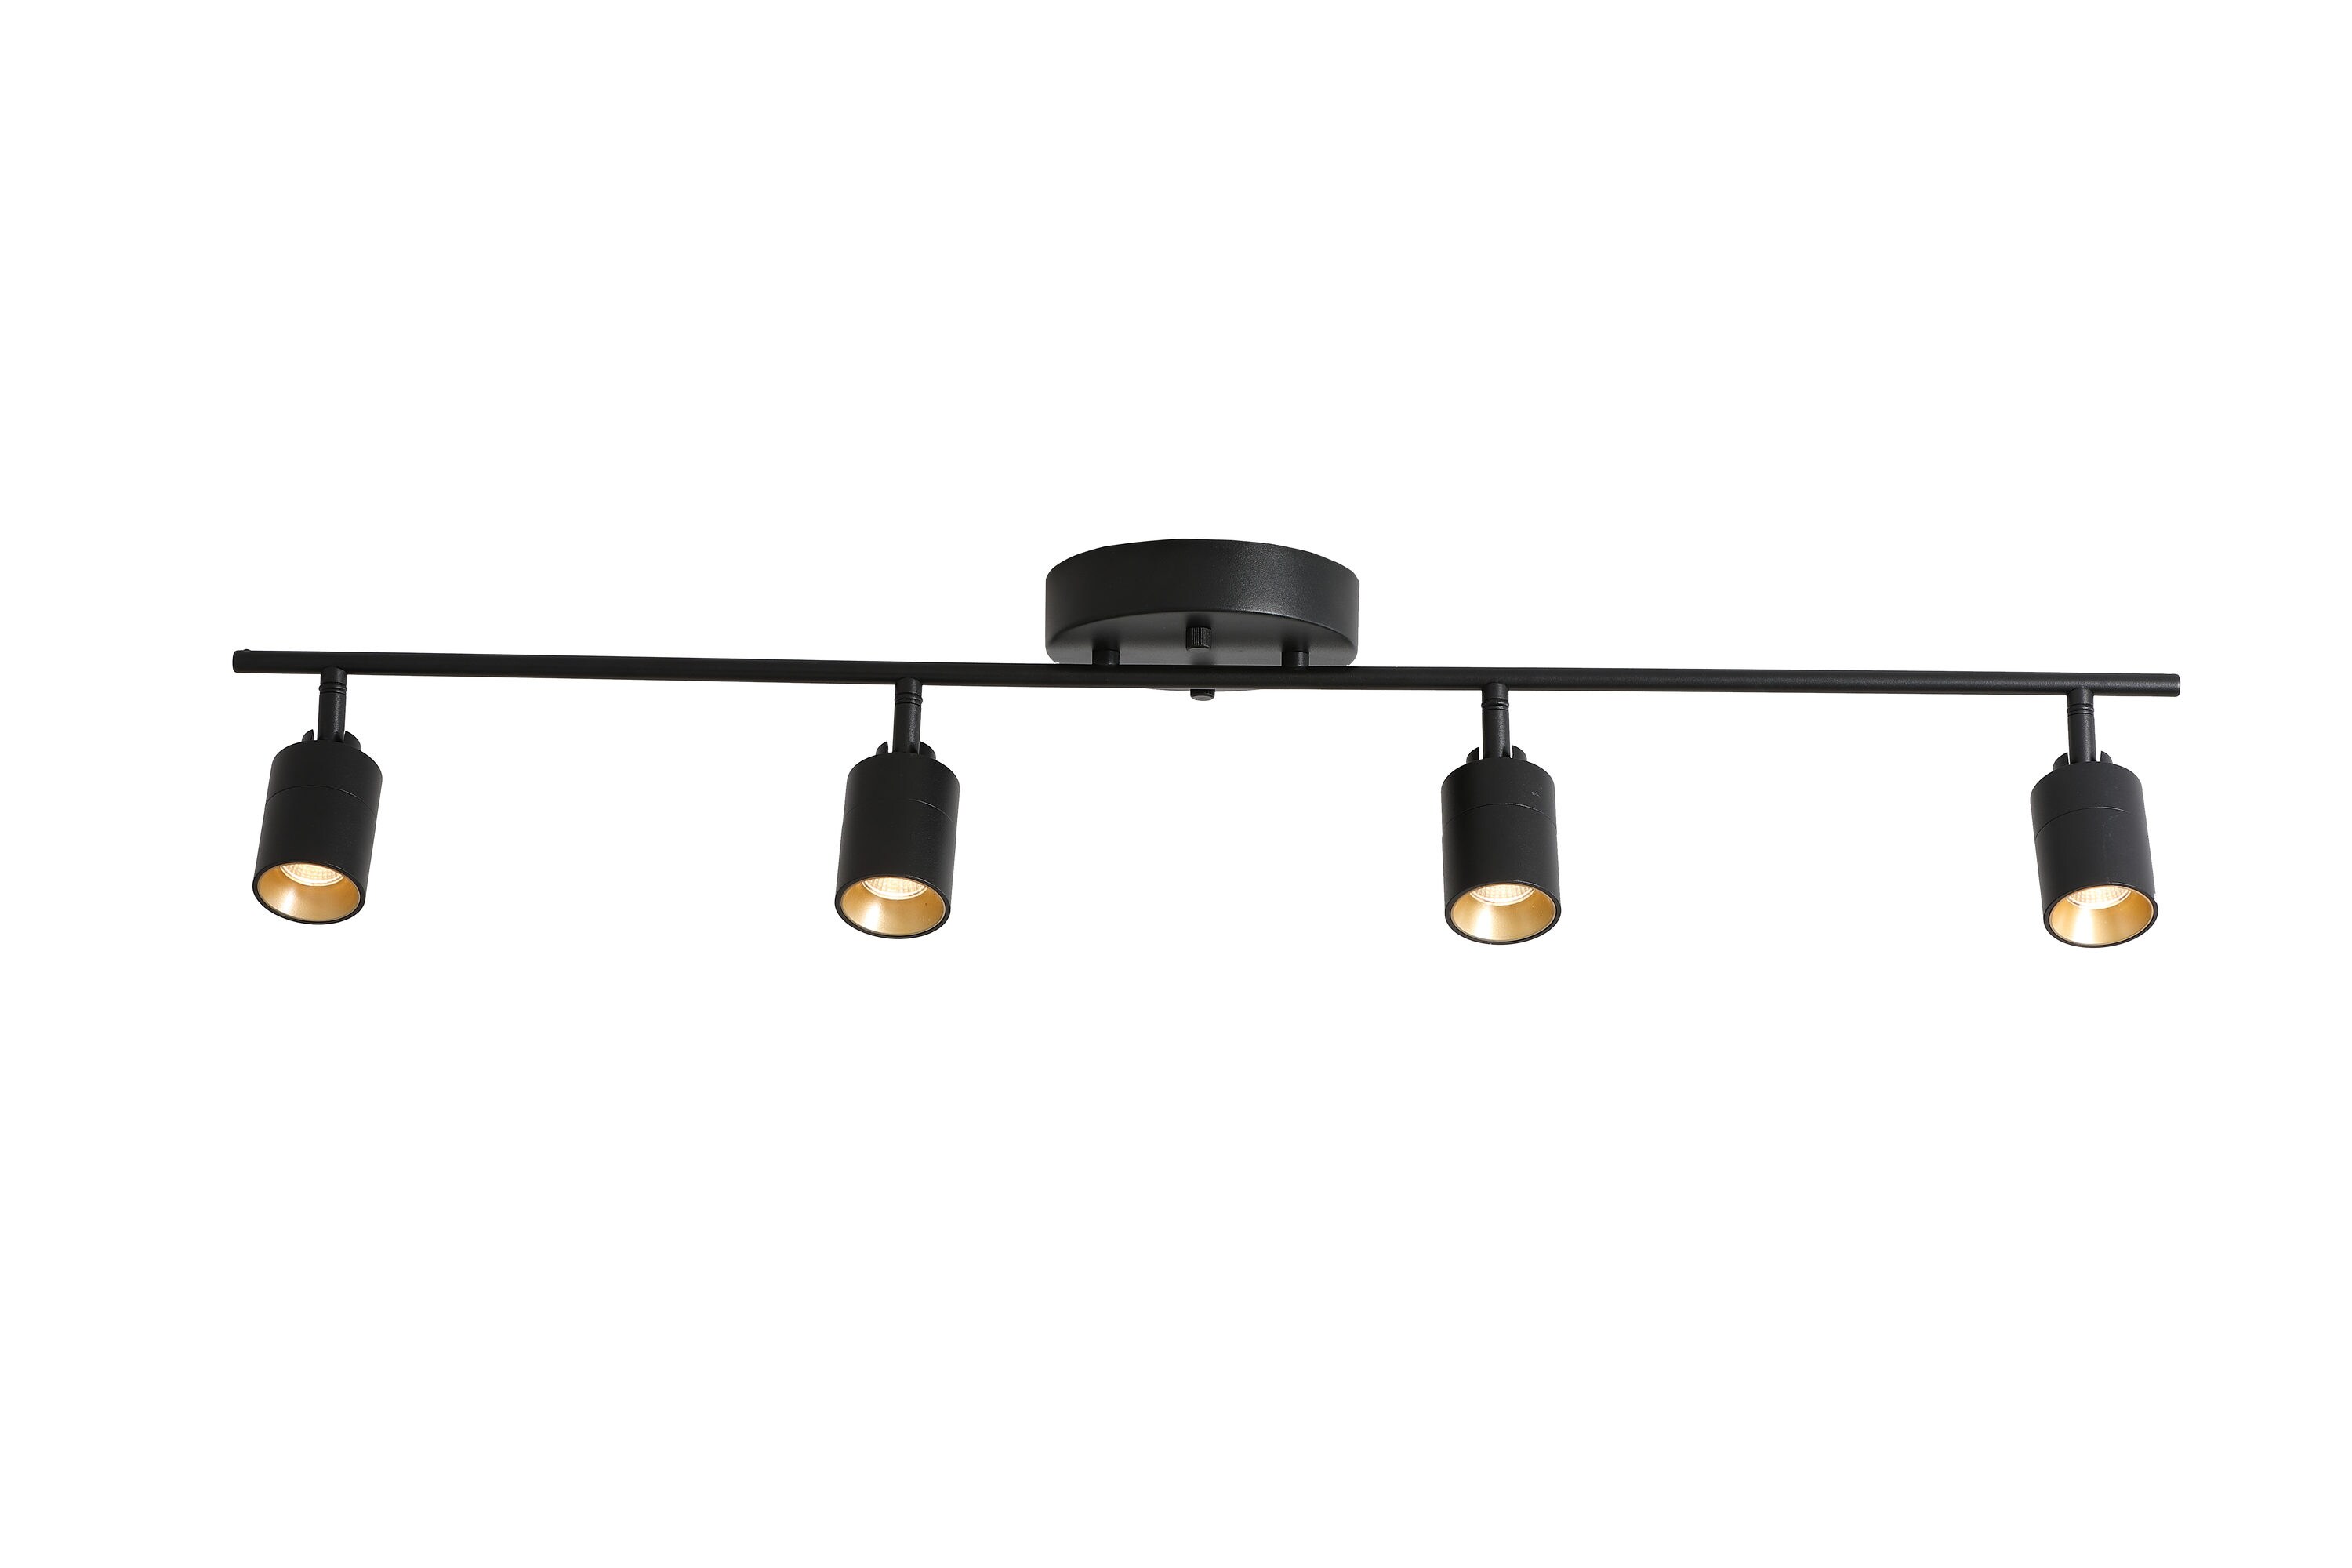 VidaLite LED Track Light 7W Two Bulb Fixed Rail with Rotating Heads 3000K Modern Interior Spotlight Black 